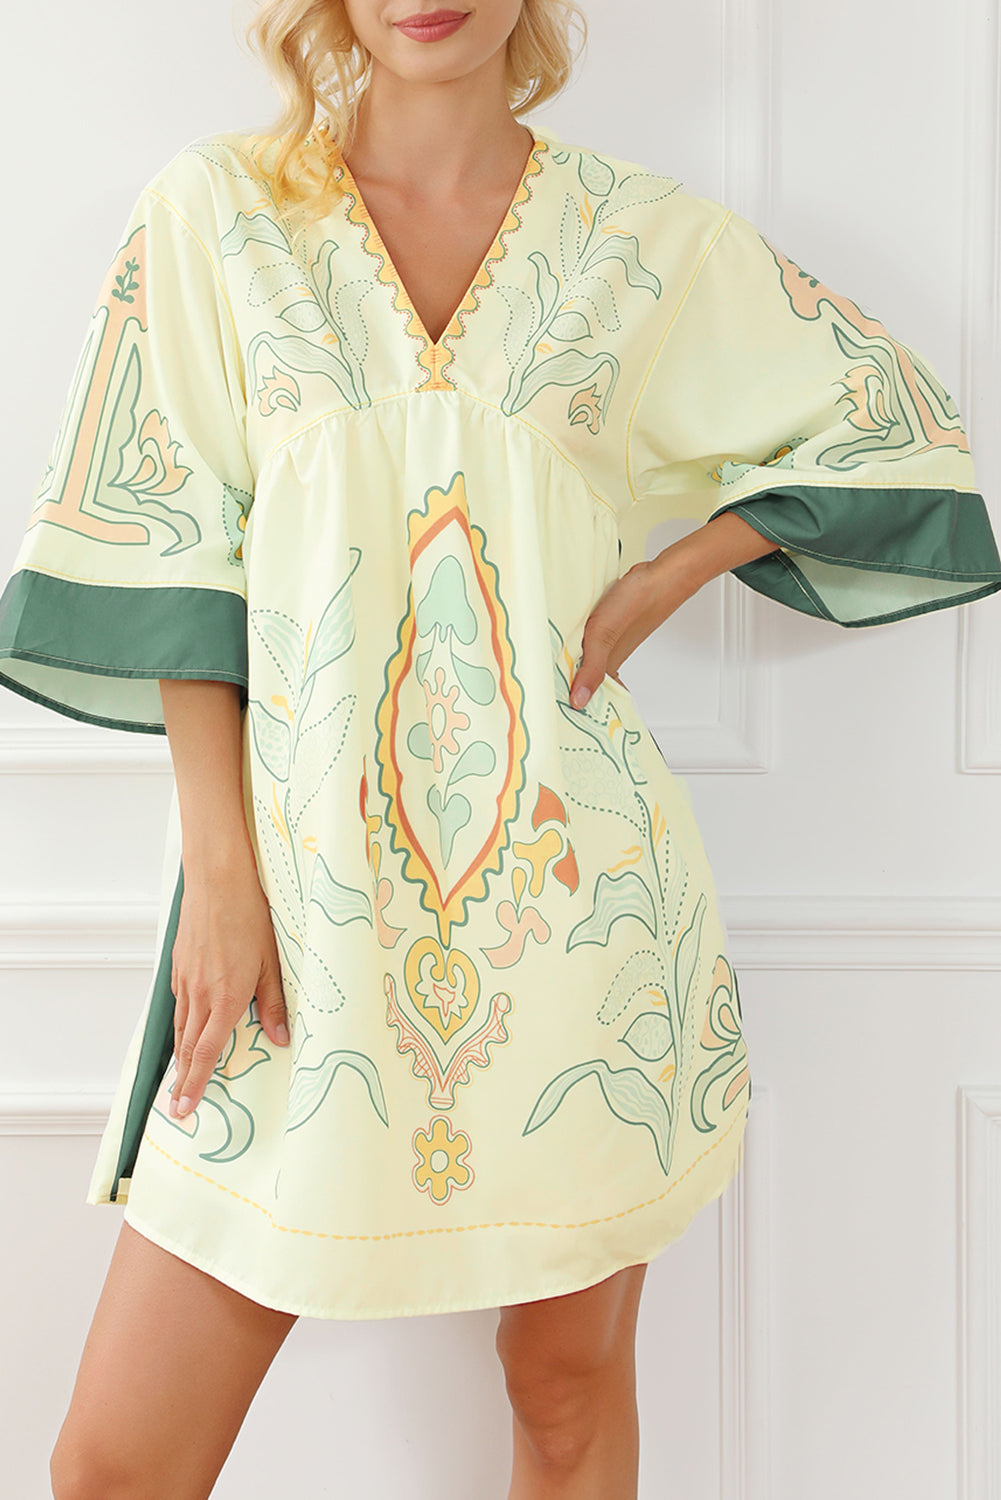 Robe kimono courte multicolore à imprimé bohème, col en V, taille empire